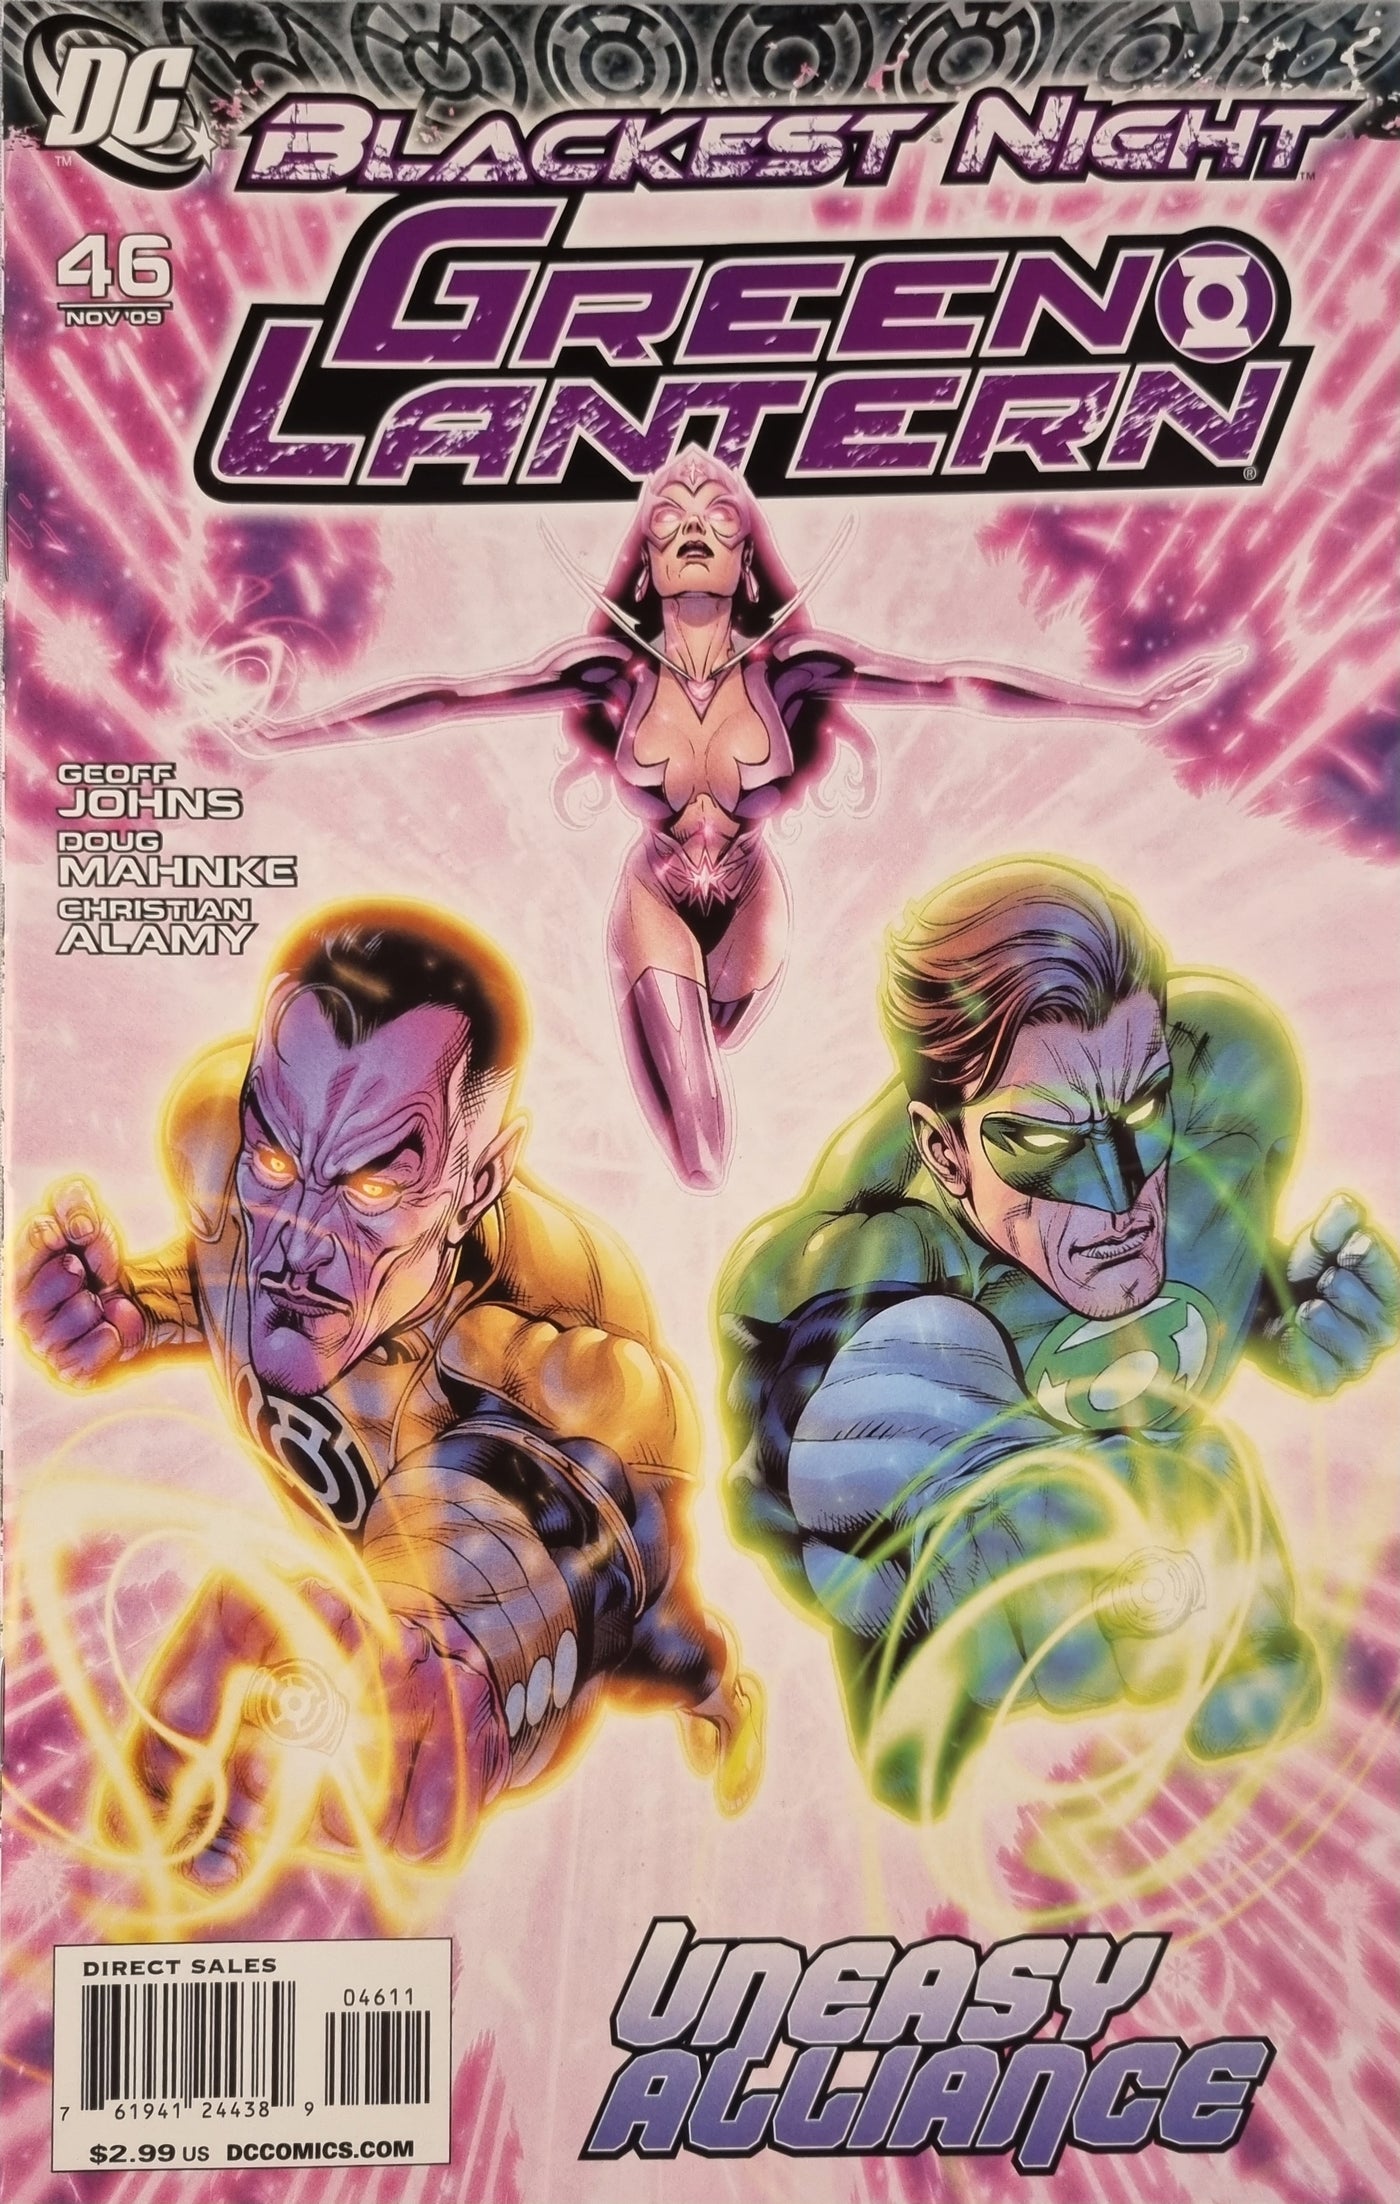 Green Lantern (Nov '09) #46